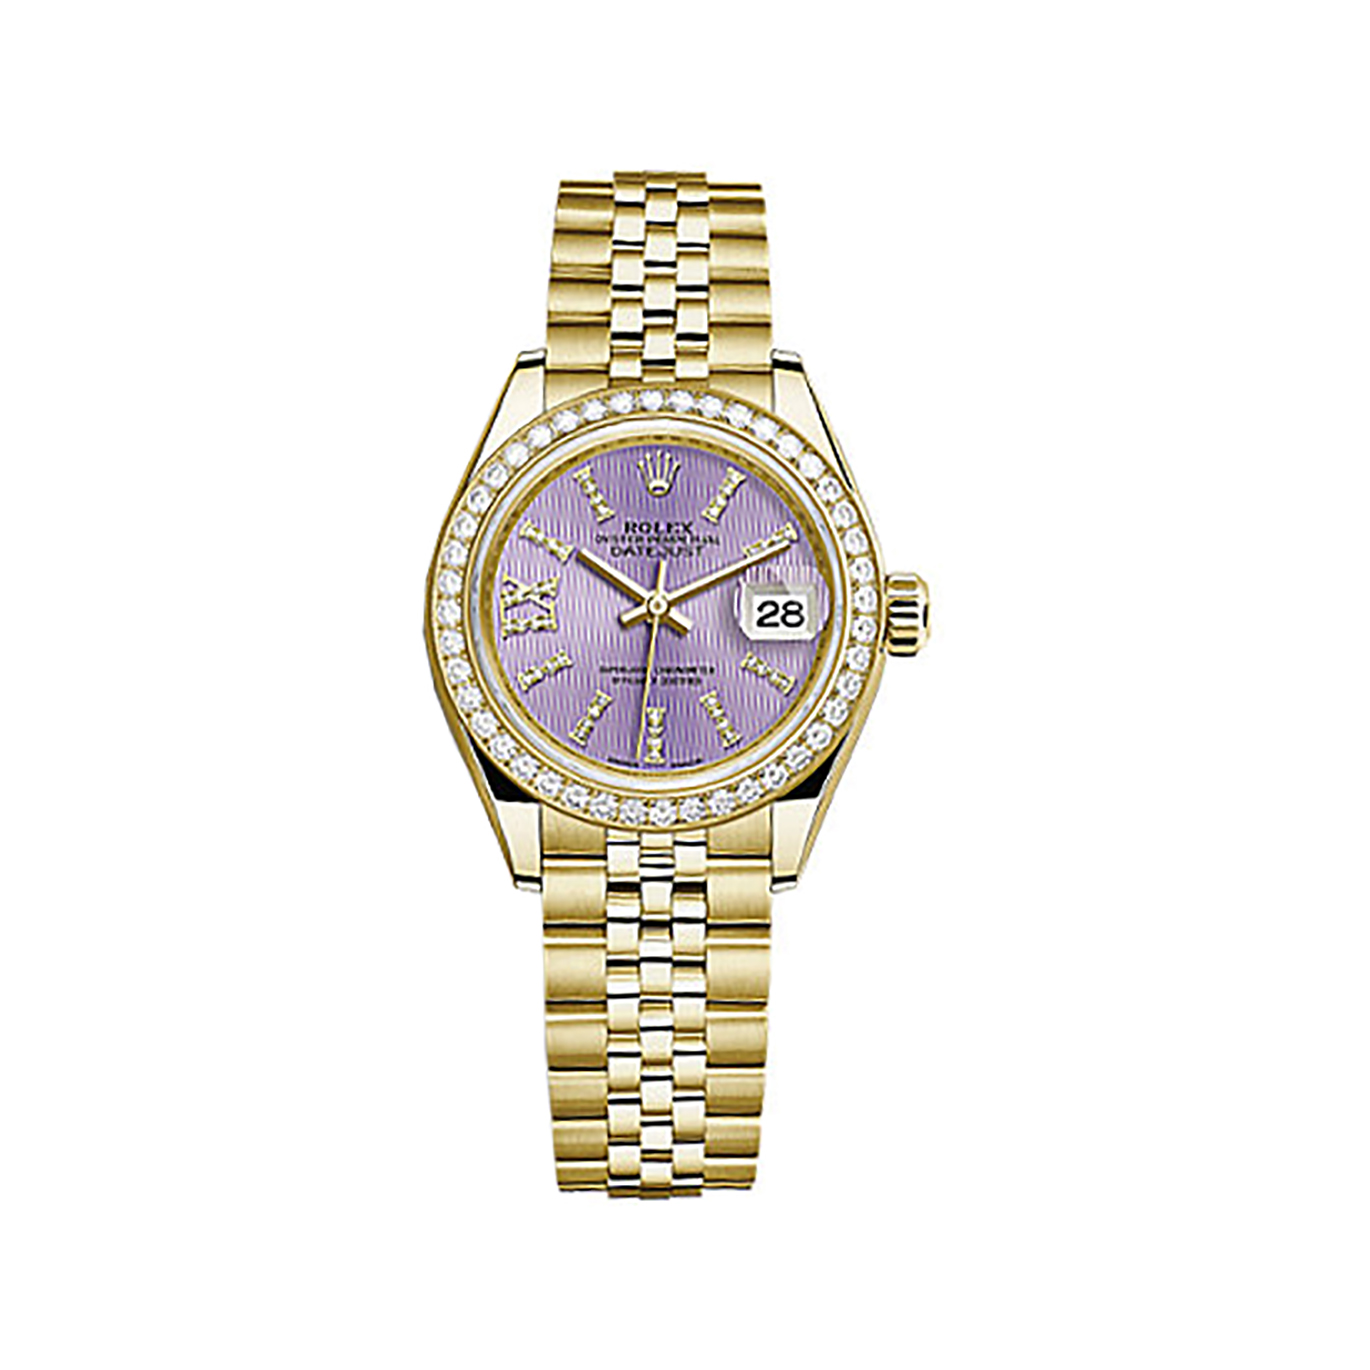 Lady-Datejust 28 279138RBR Gold & Diamonds Watch (Lilac Set with Diamonds)